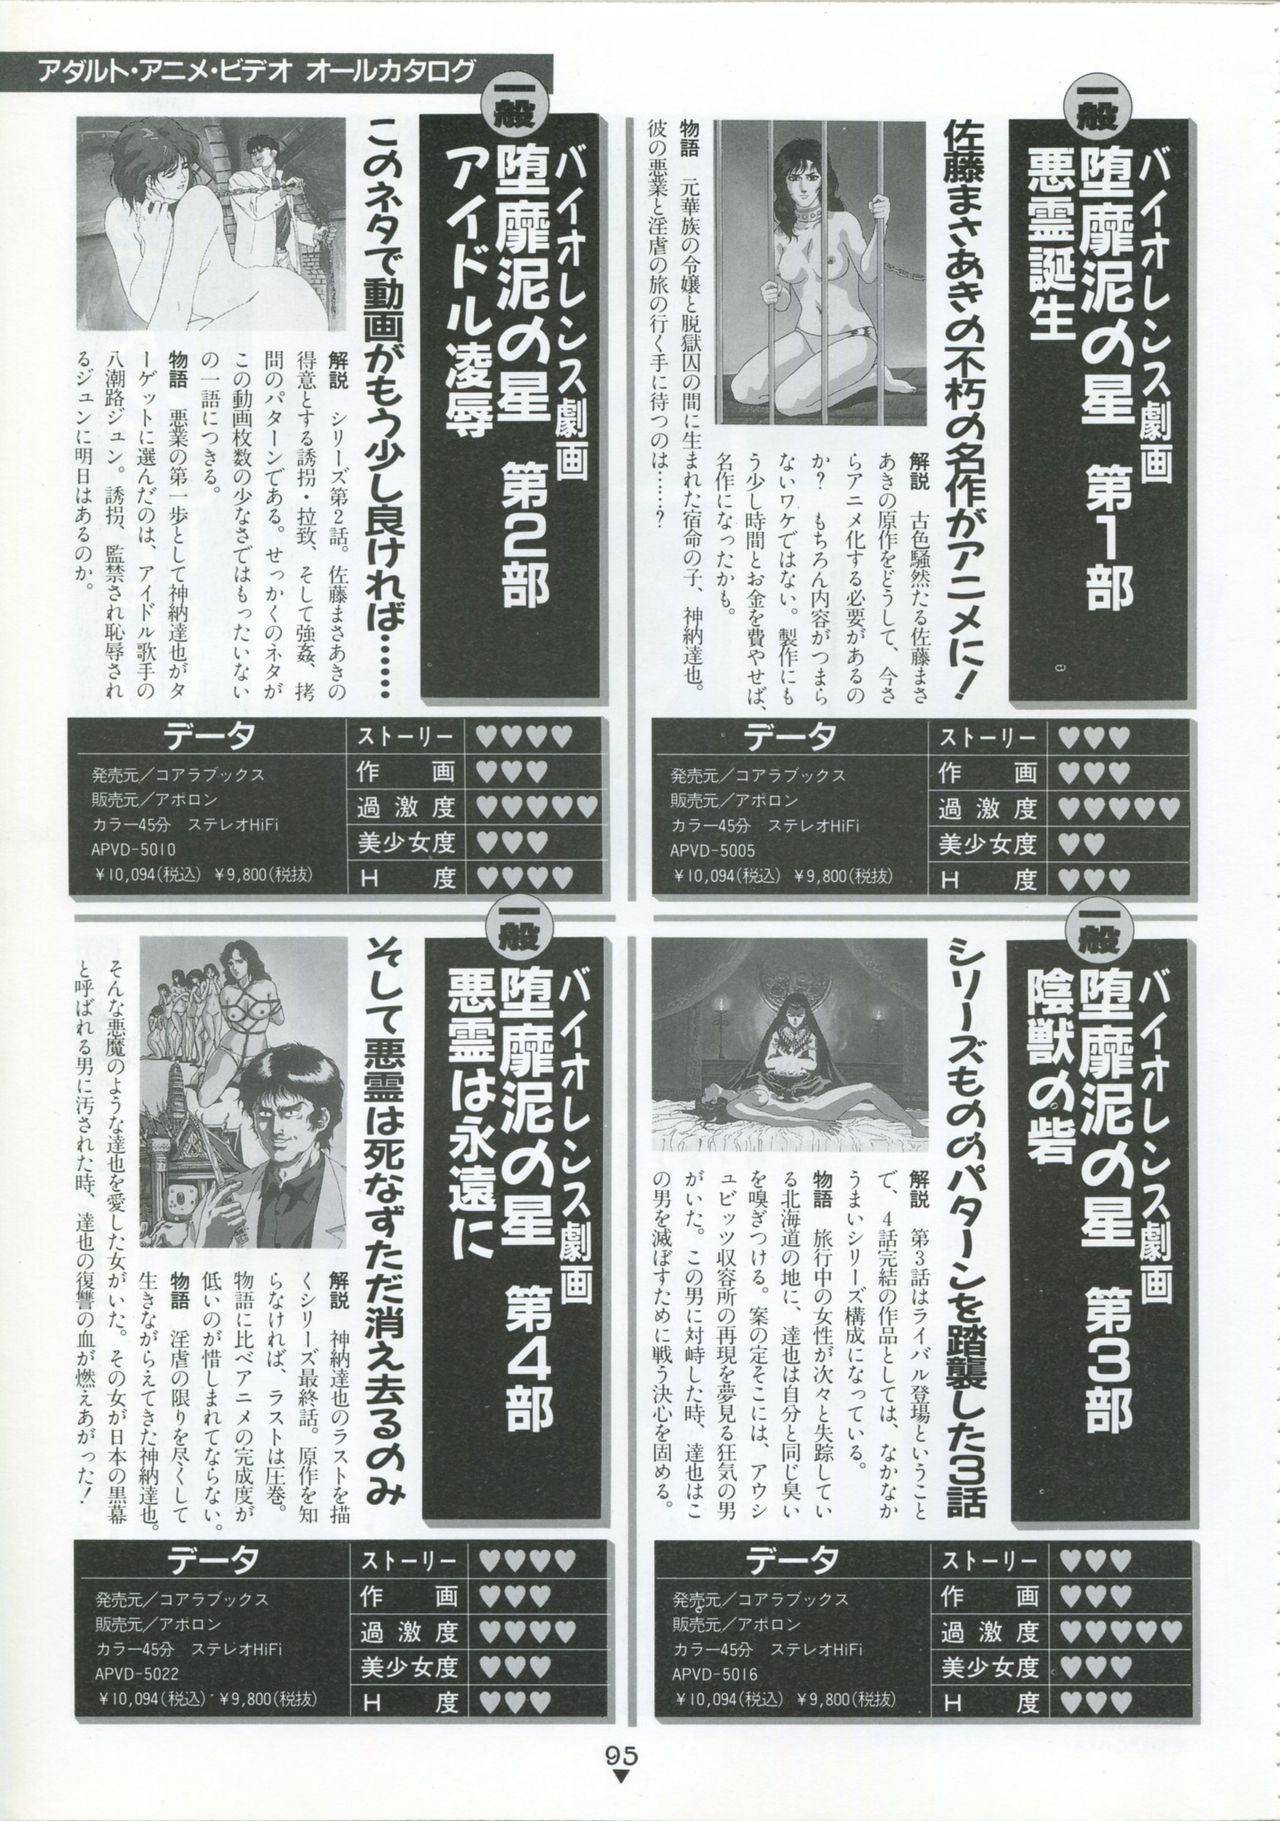 Bishoujo Anime Daizenshuu - Adult Animation Video Catalog 1991 90